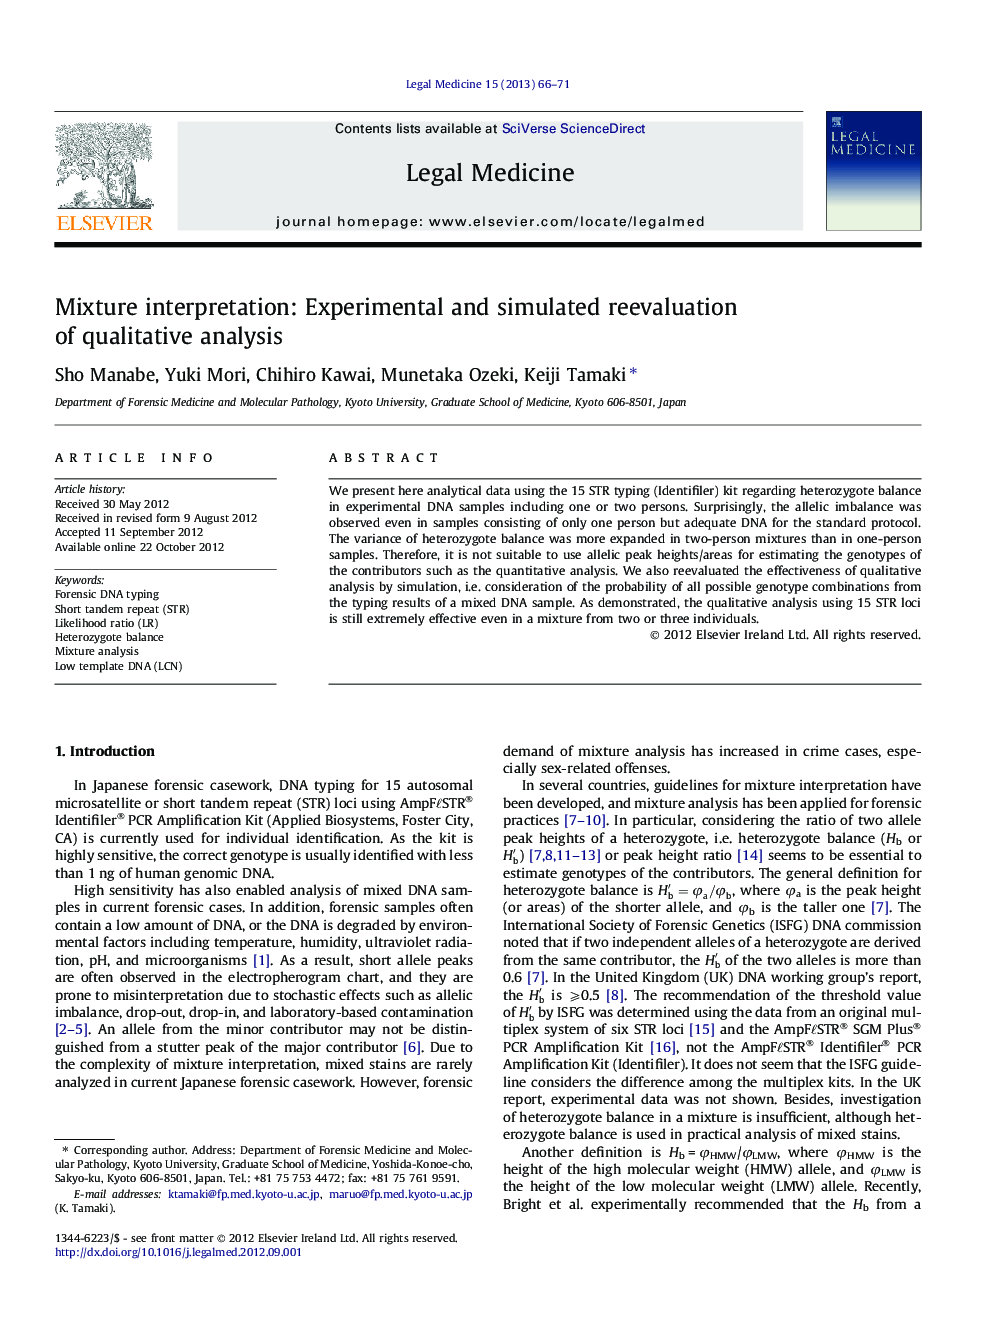 Mixture interpretation: Experimental and simulated reevaluation of qualitative analysis